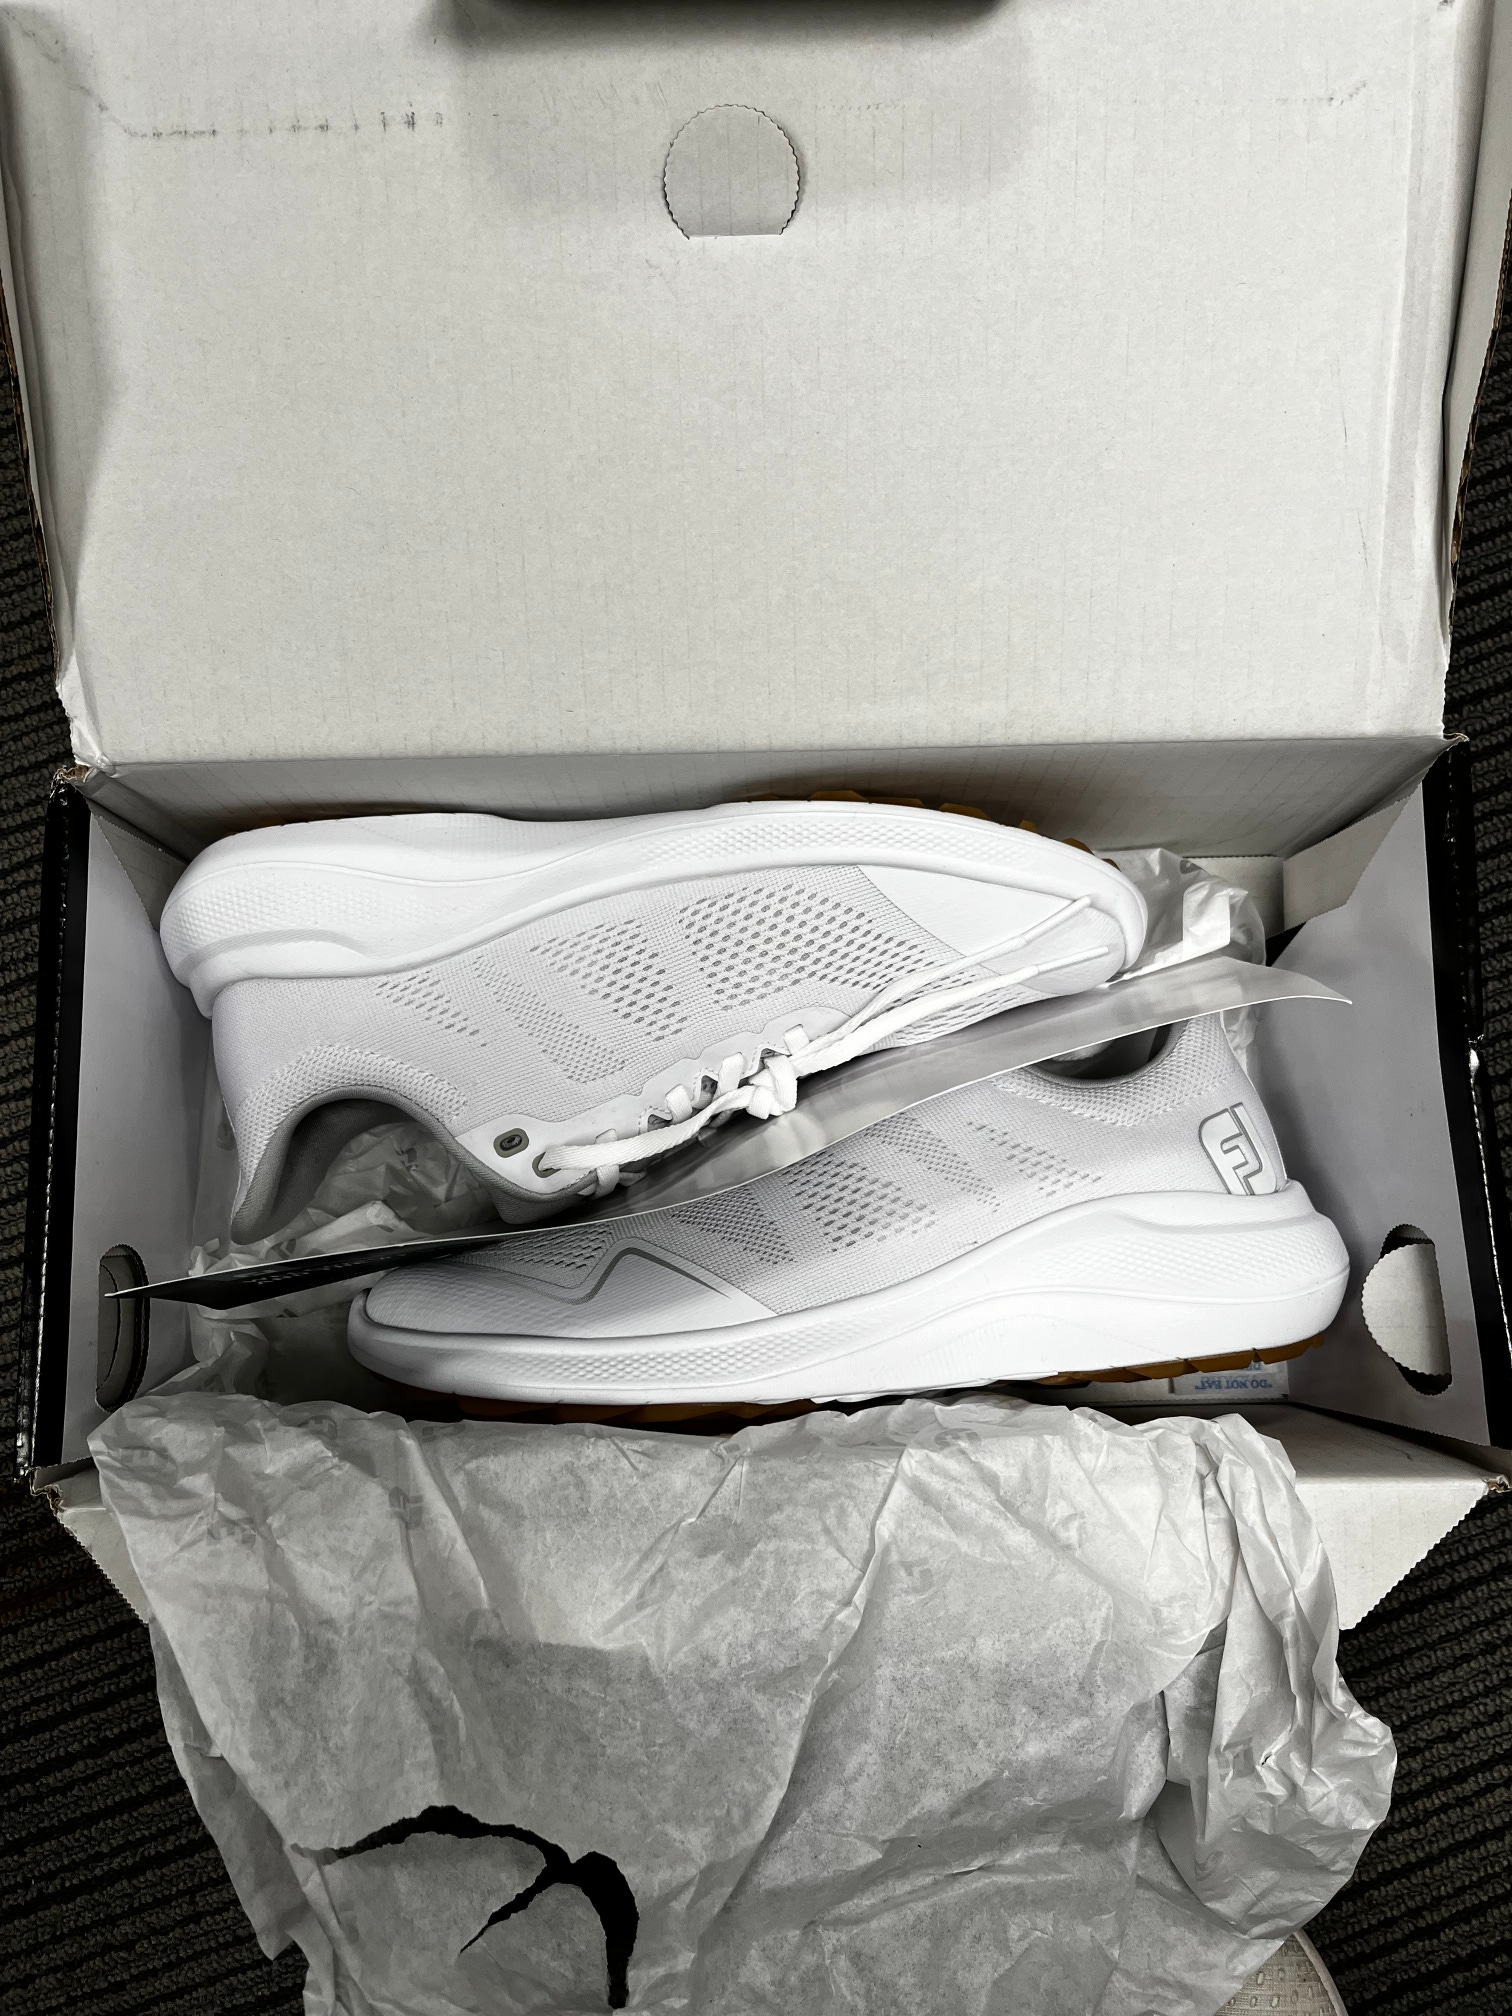 New Women's Size 8.0 FootJoy Flex Golf Shoes